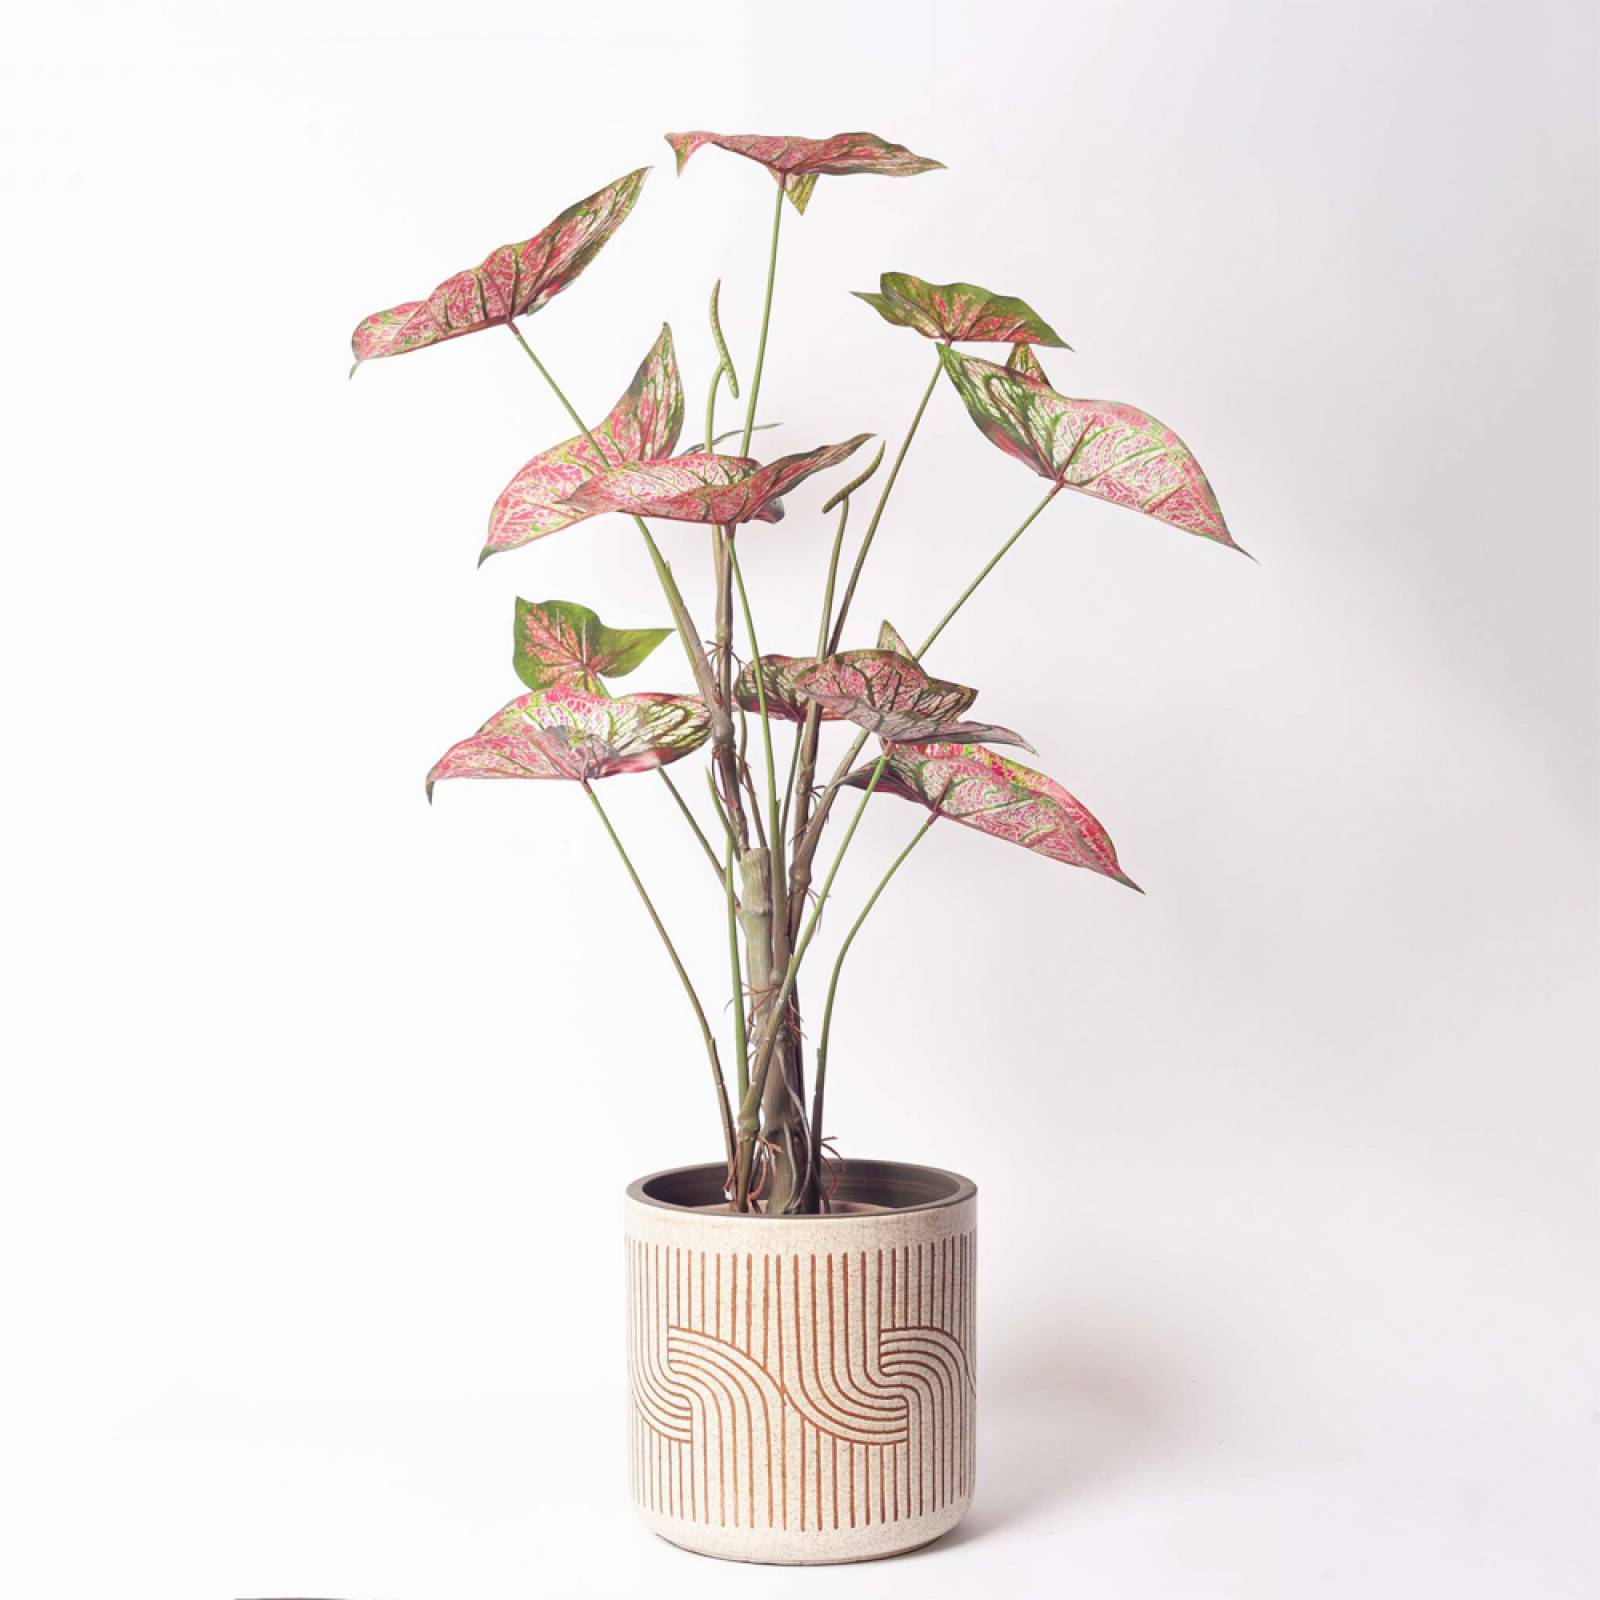 Faux Pink Caladium Plant In Pot thumbnails